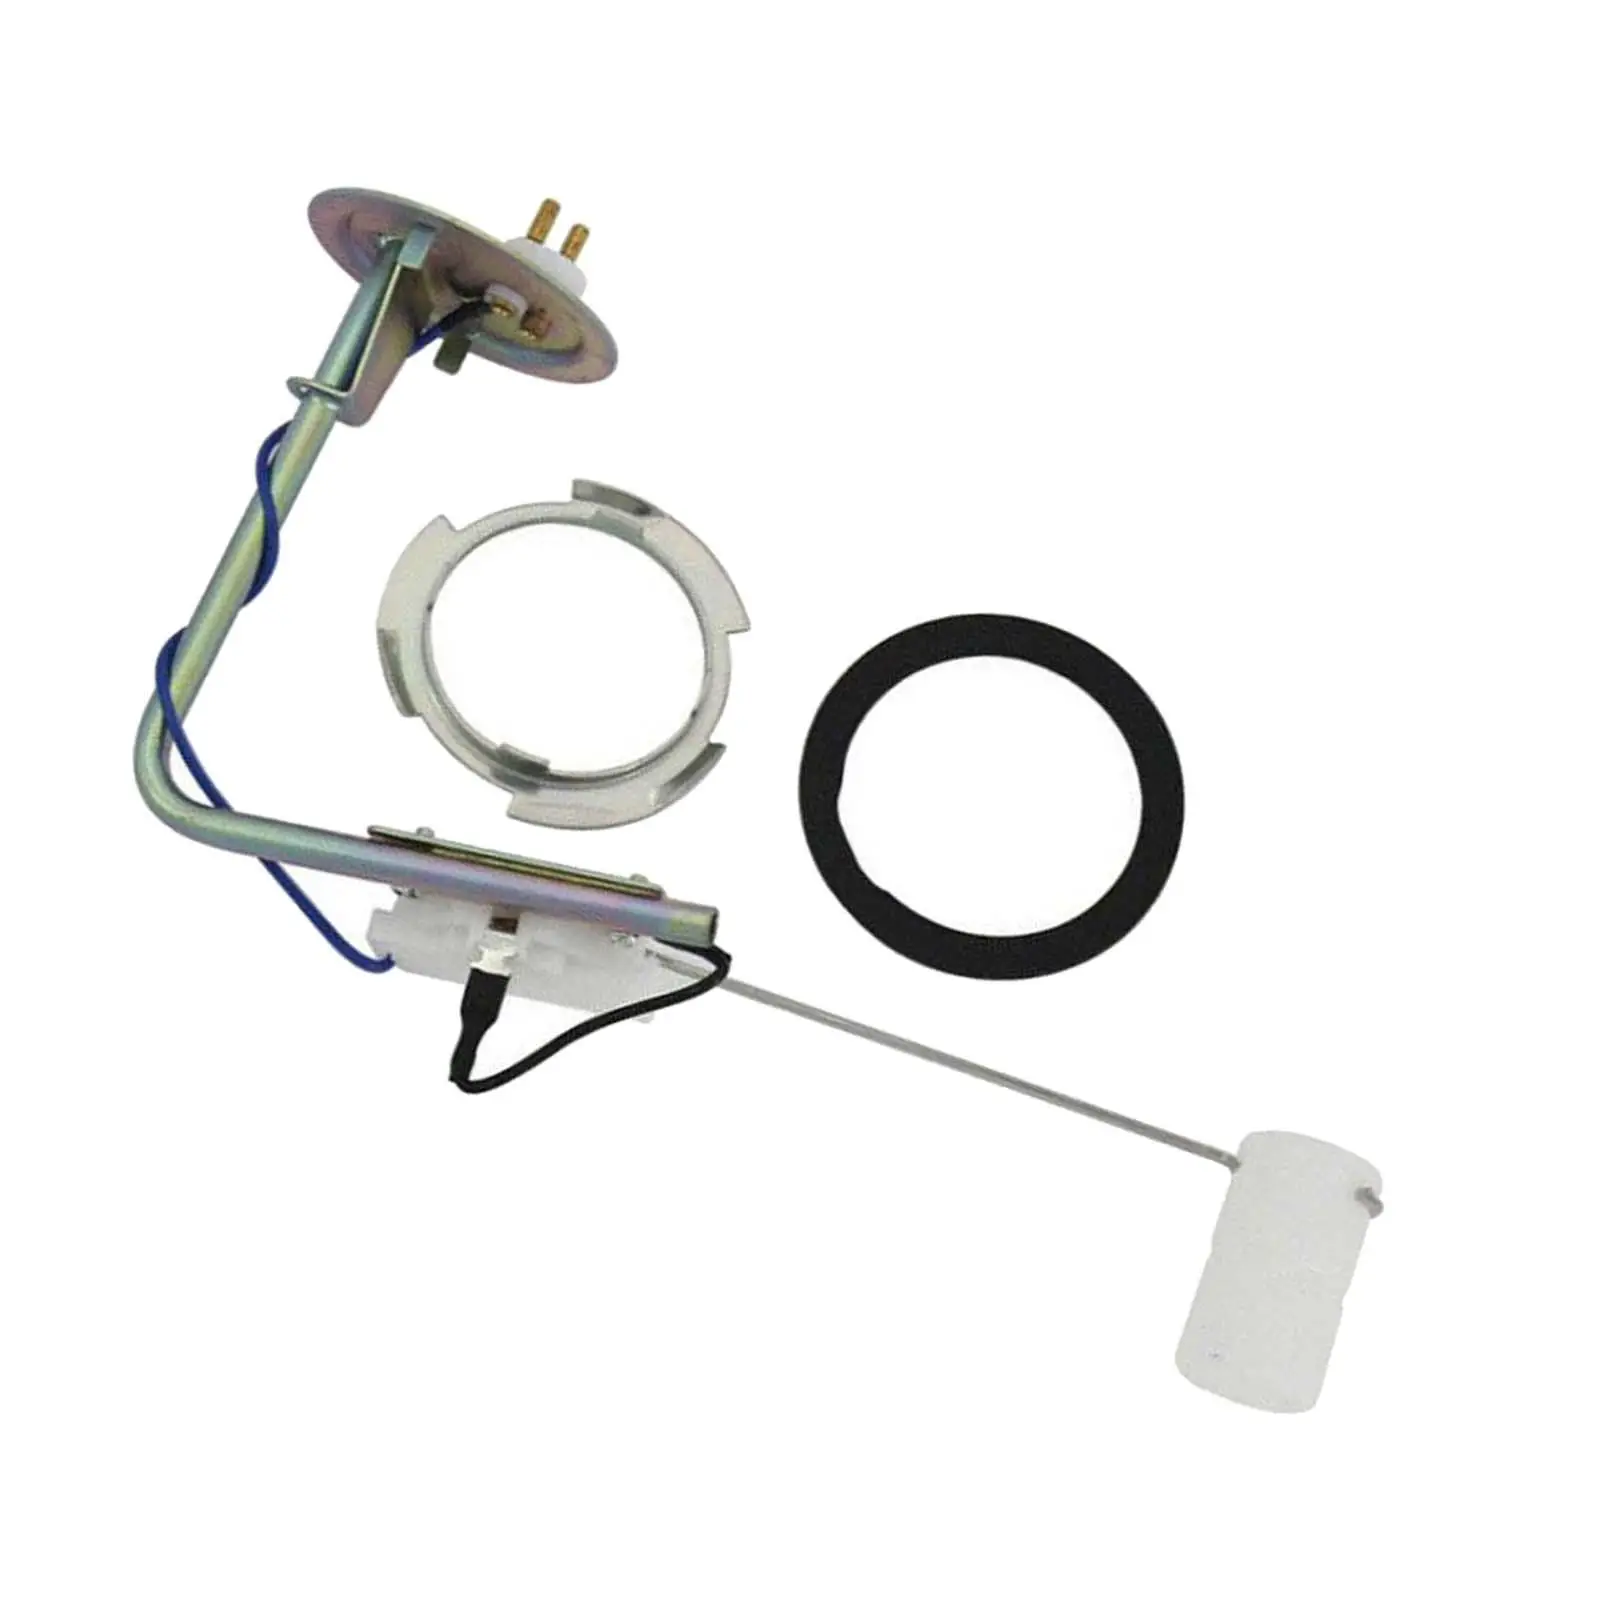 Fuel Pump Sender Replaces Easy Installation Accessories Spare Parts Professional